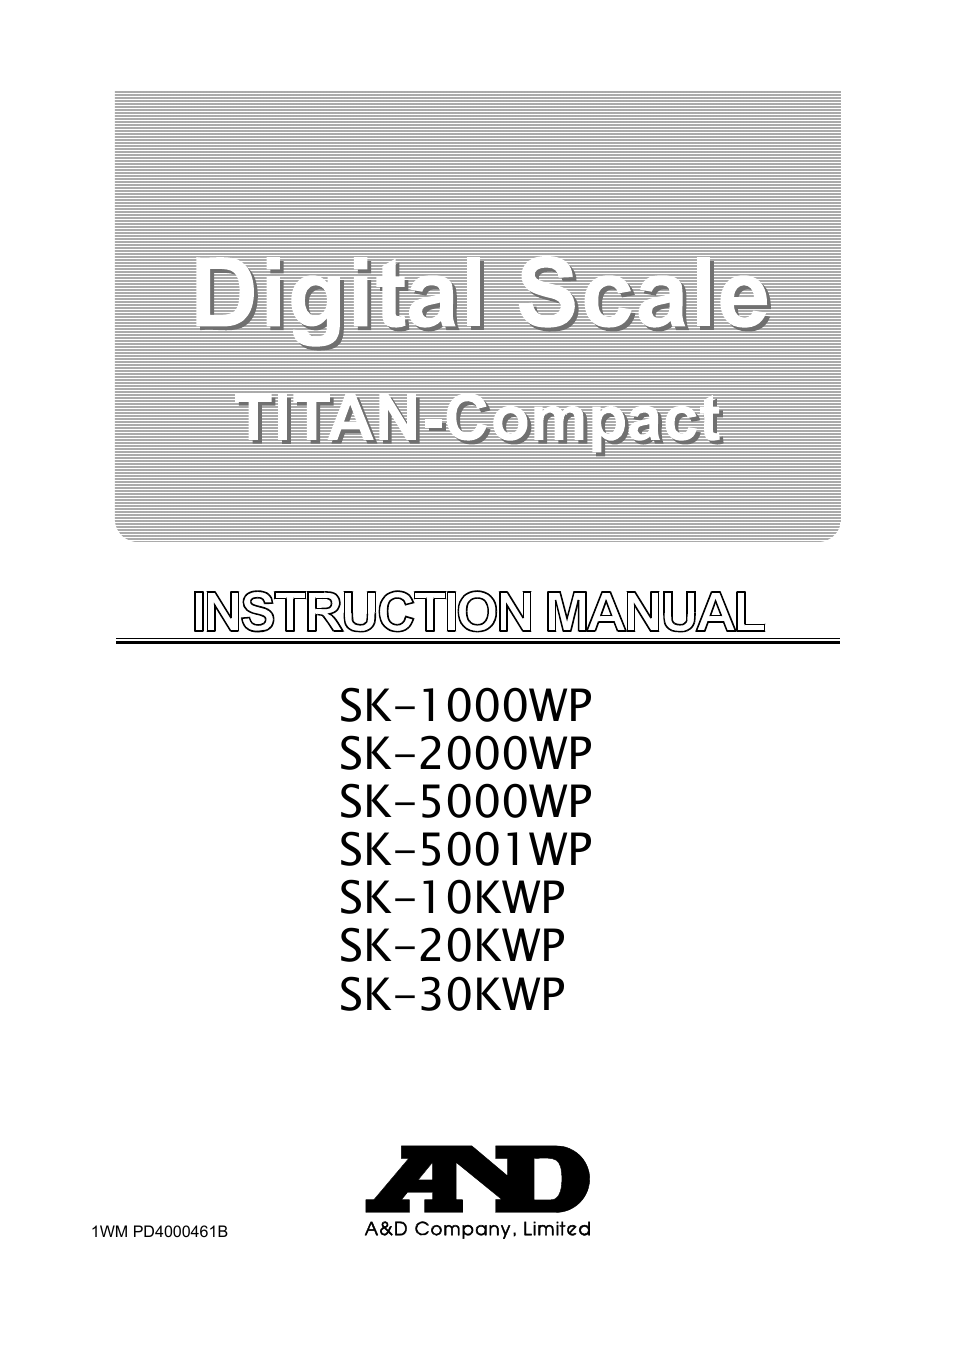 Digital Scale SK-5001WP